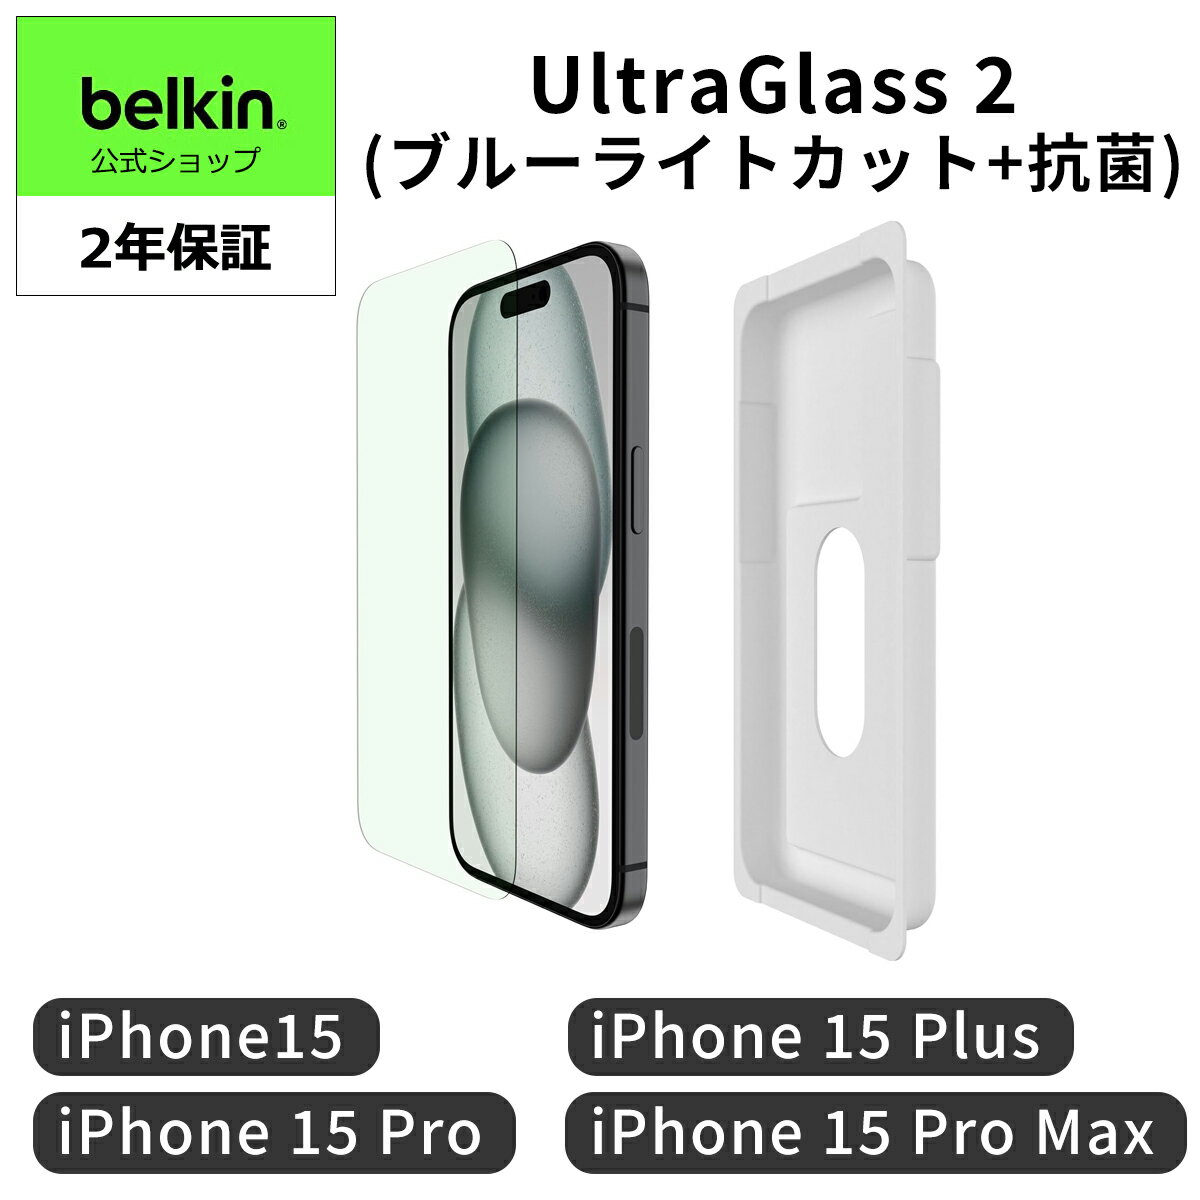 Belkin iPhone 15/15 Plus/15 Pro/15 Pro Max用 UltraGlass 2保護ガラスフィルム ブルーライトカット 超強化ガラス 抗菌 0.29mm 簡単取付キット付き OVA13